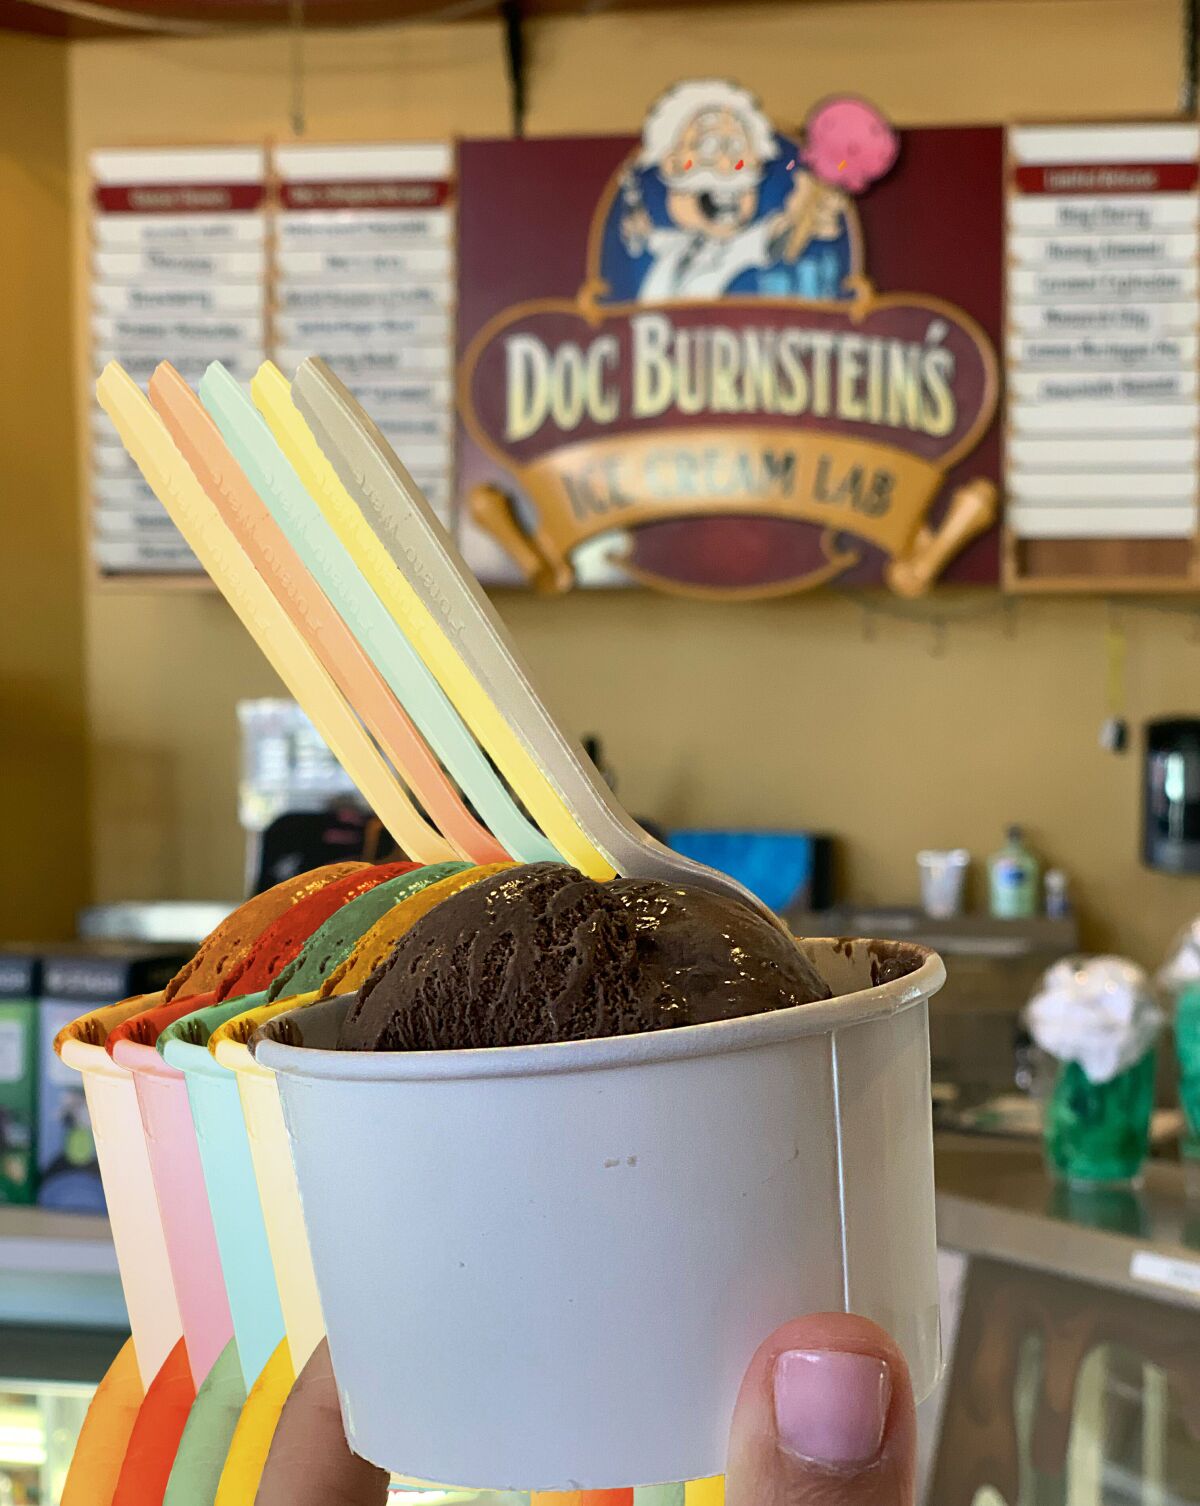 Scoops of ice cream inside a Doc Burnstein's Ice Cream Lab location.